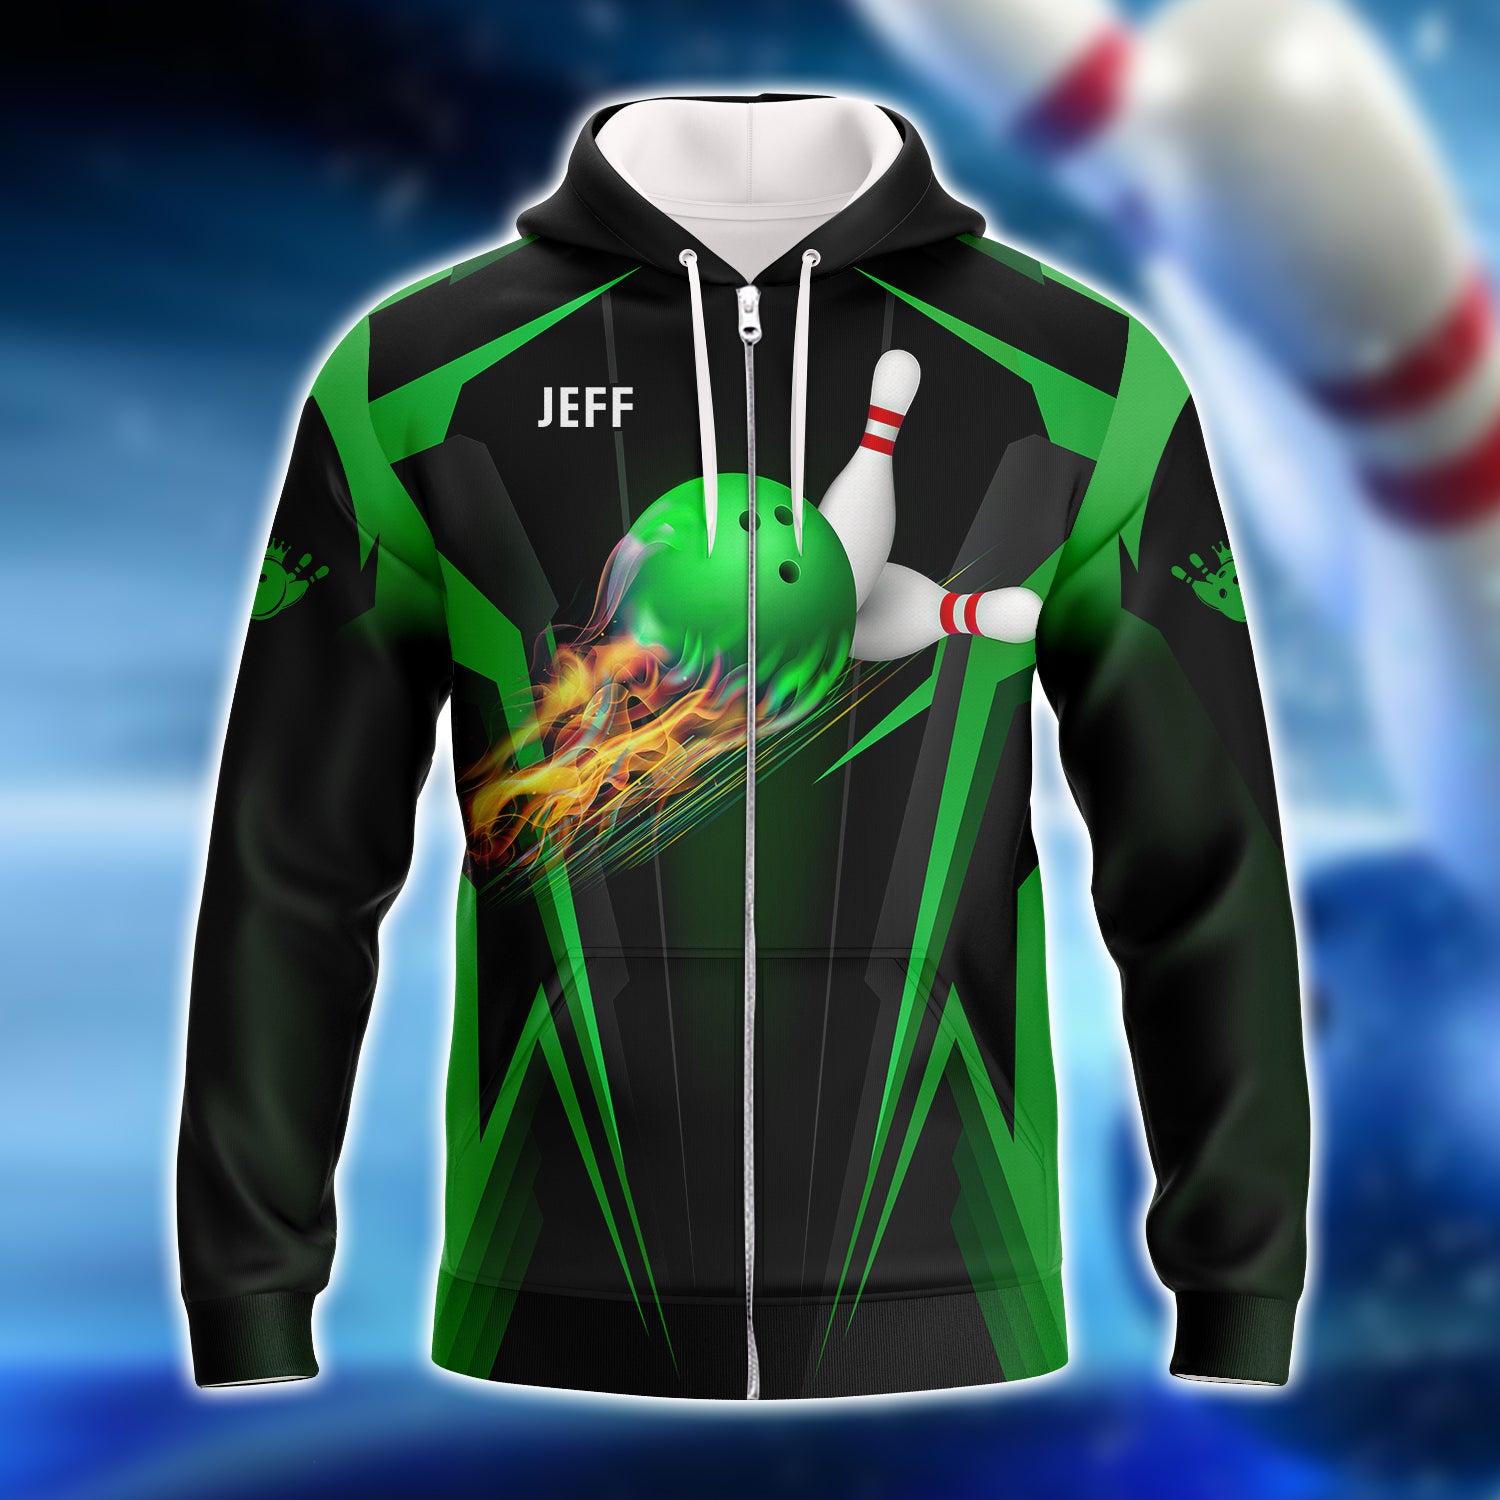 JEFF - The Green Bowling Ball in Flames 3D Shirt - QB95